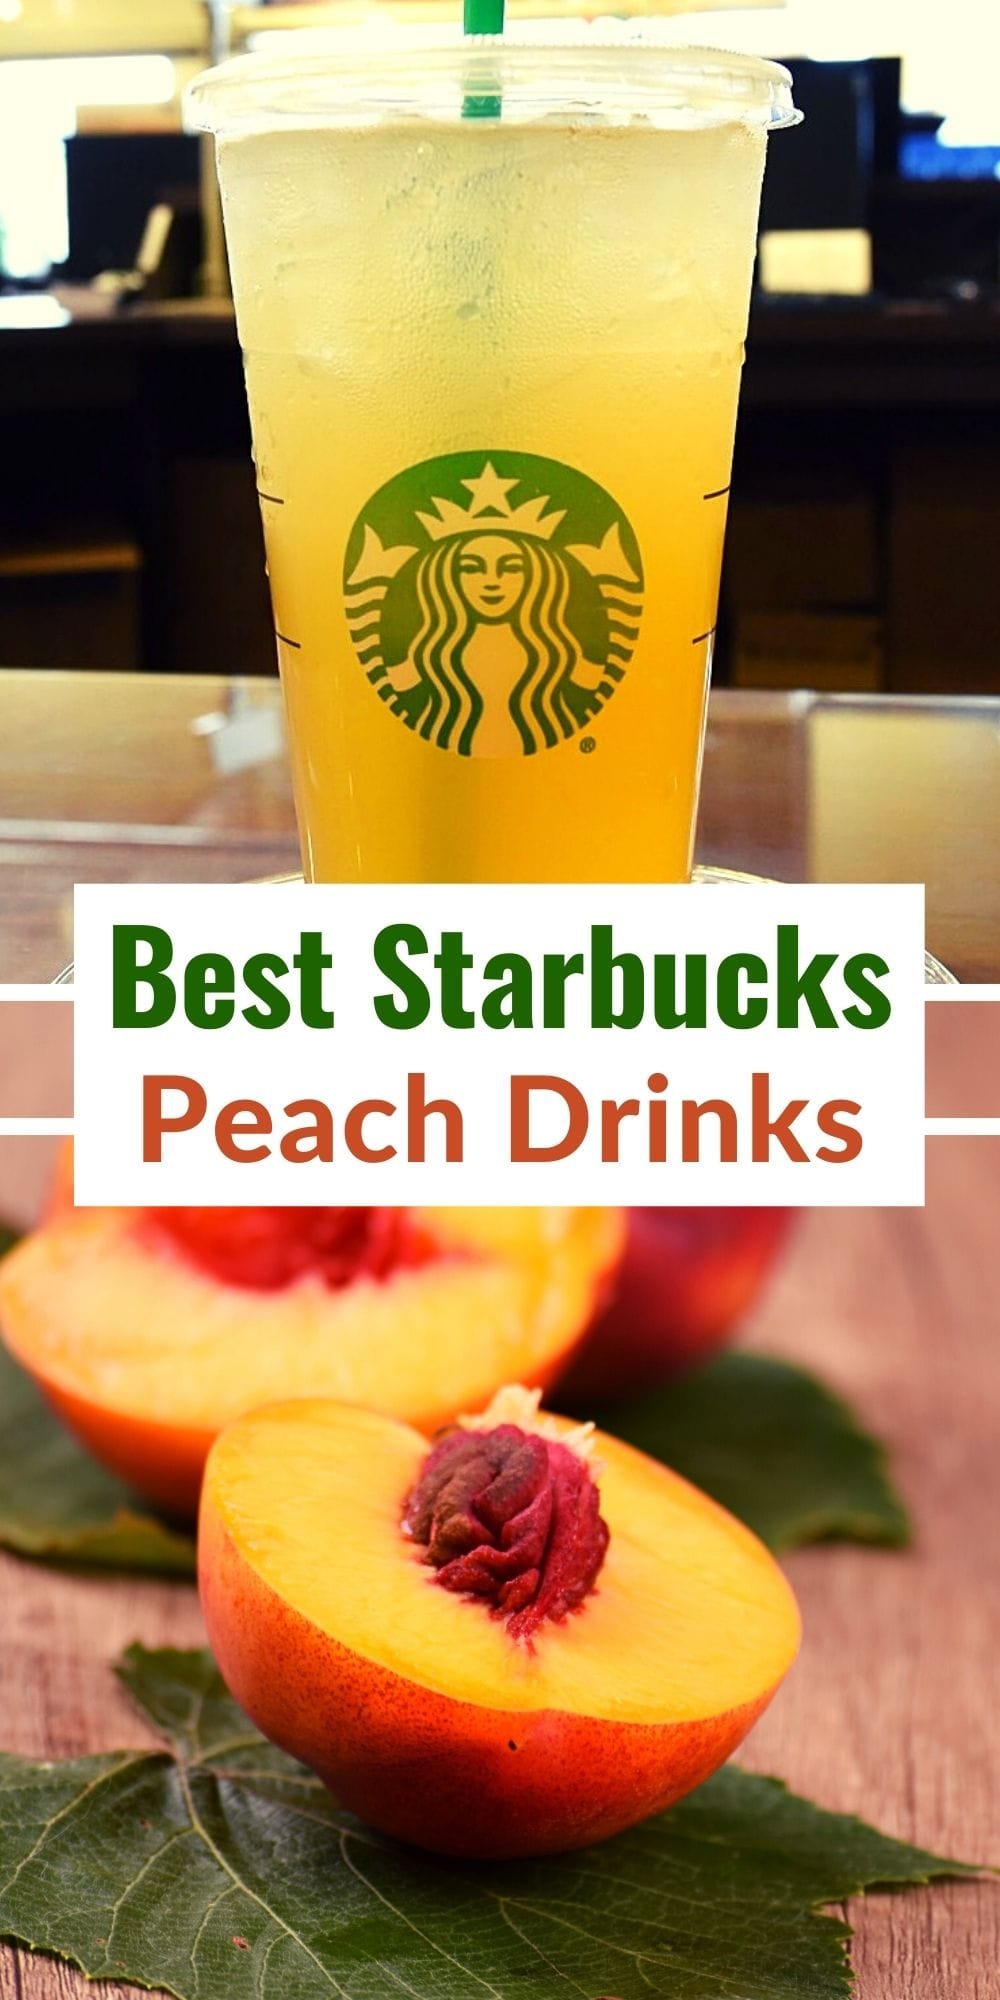 Best Starbucks Peach Drinks